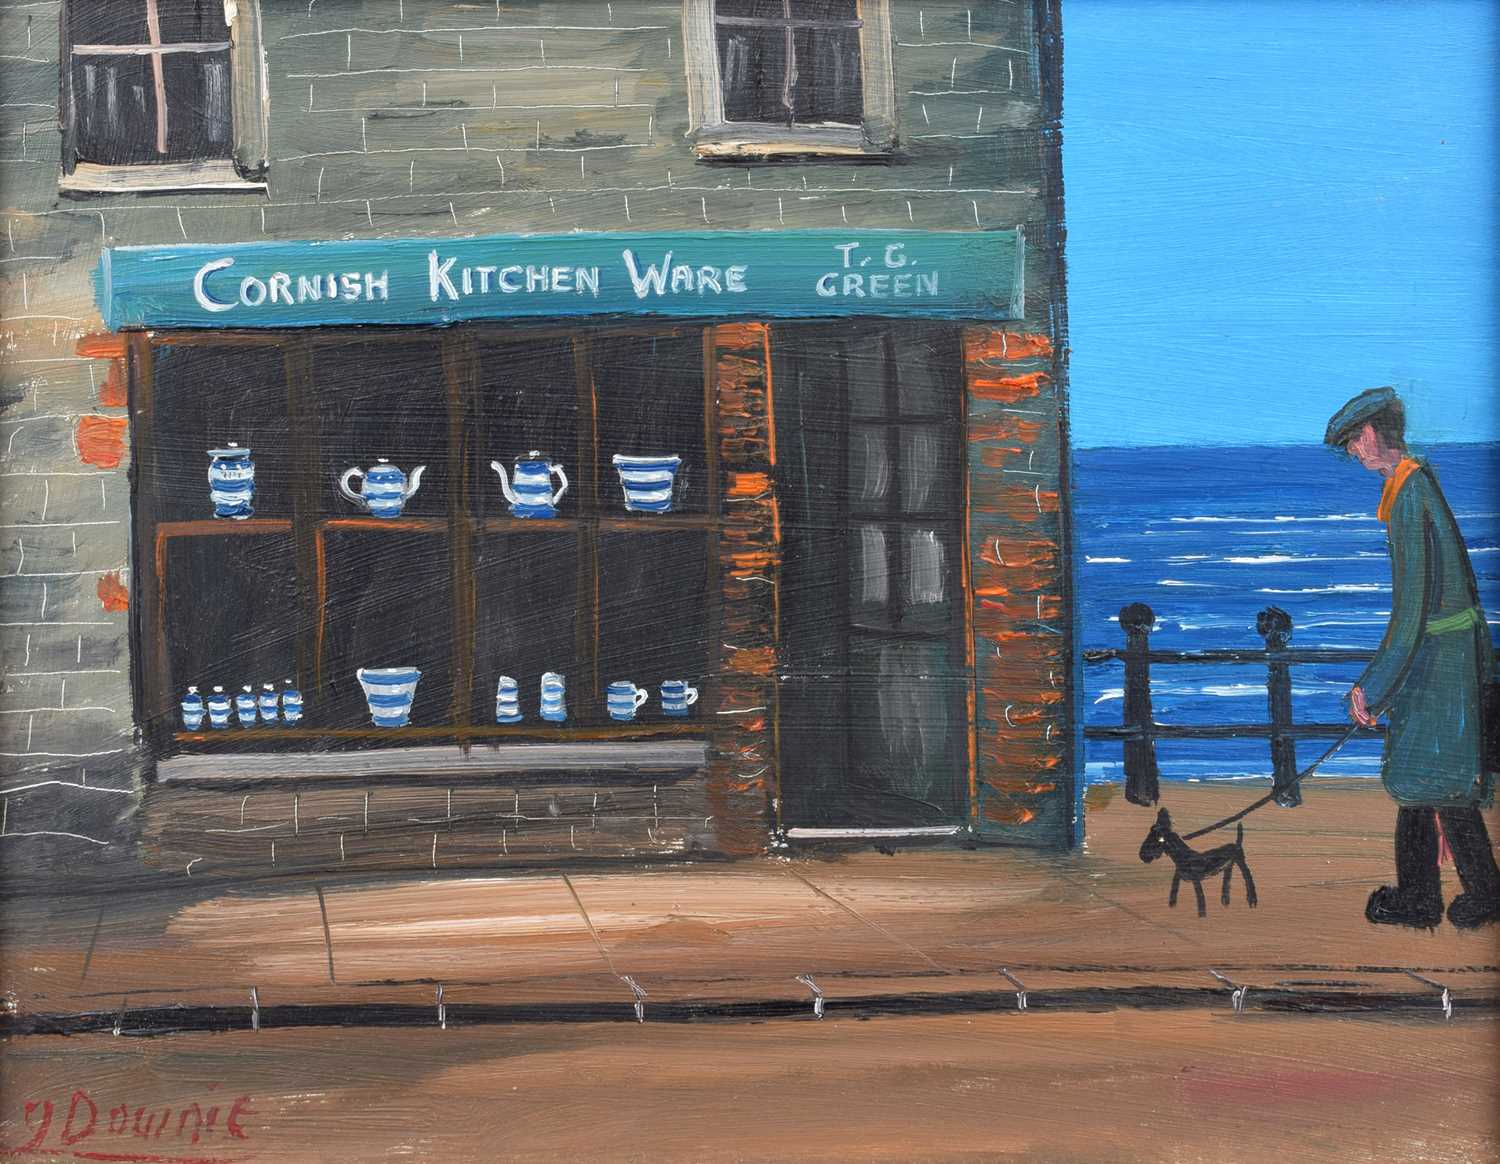 James Downie (British 1949-) "Cornish Kitchenware - T.G. Green"